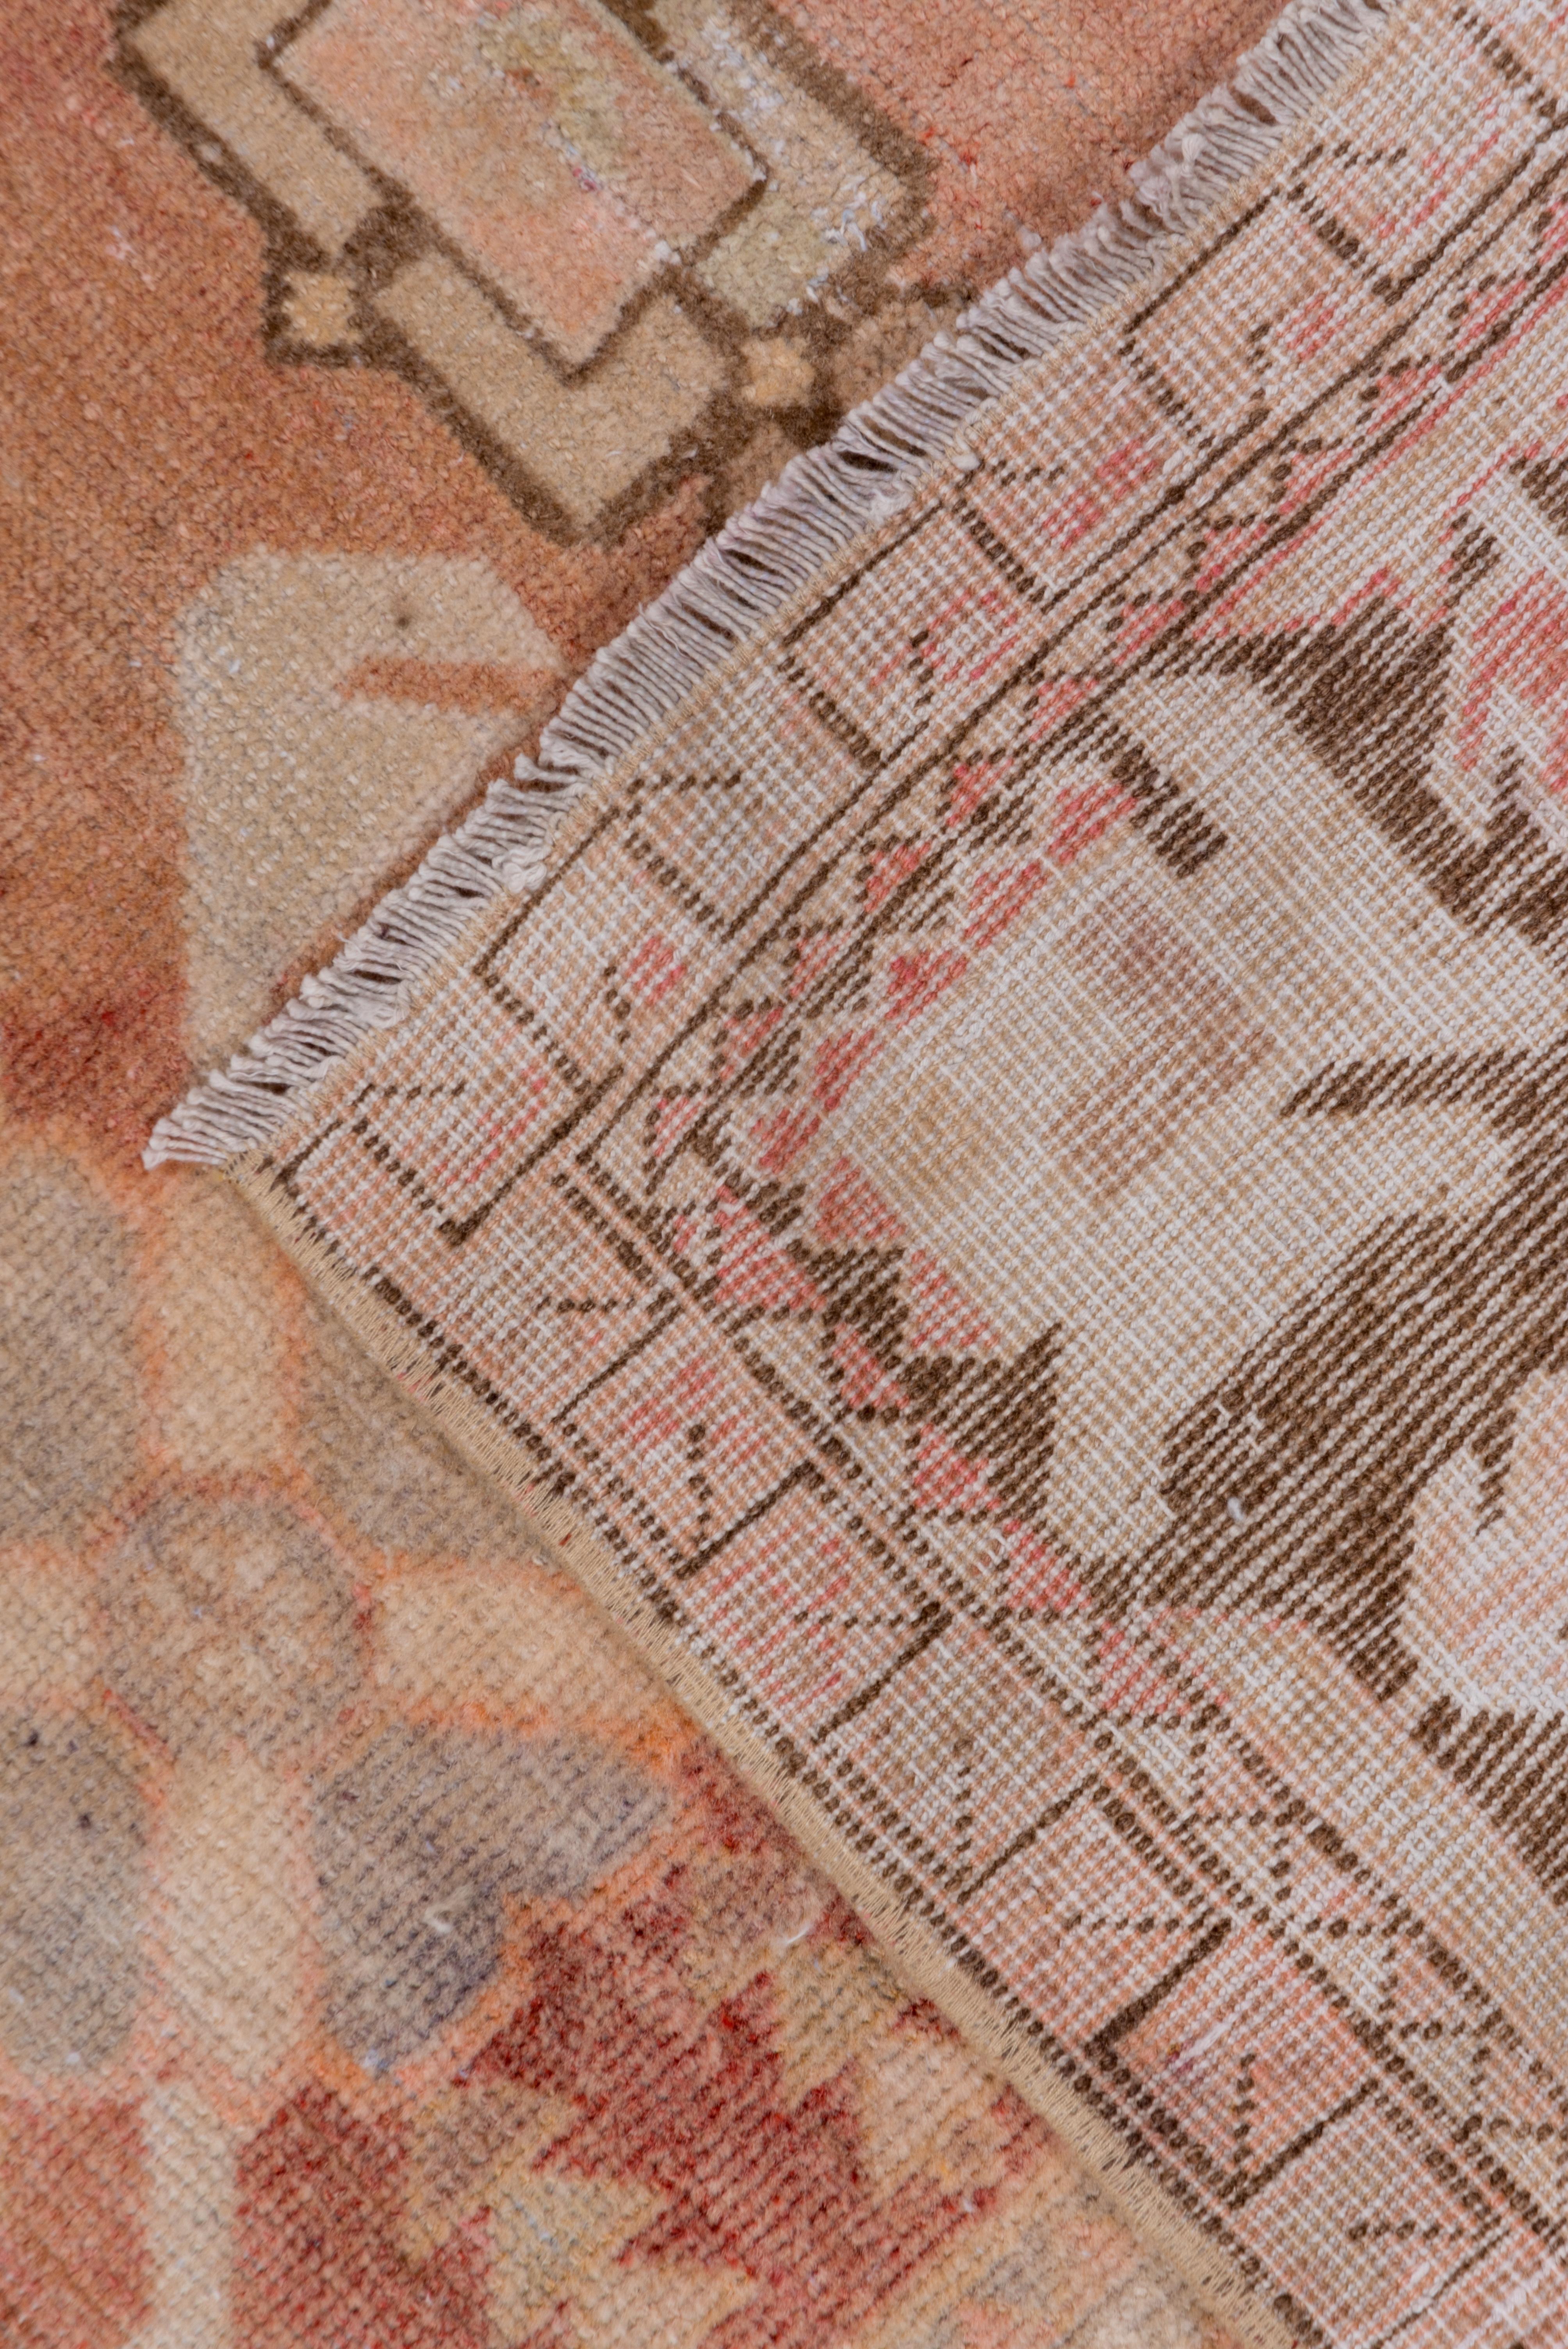 Mid-20th Century Antique Khotan Rug, Terracotta Field, Gray Borders For Sale